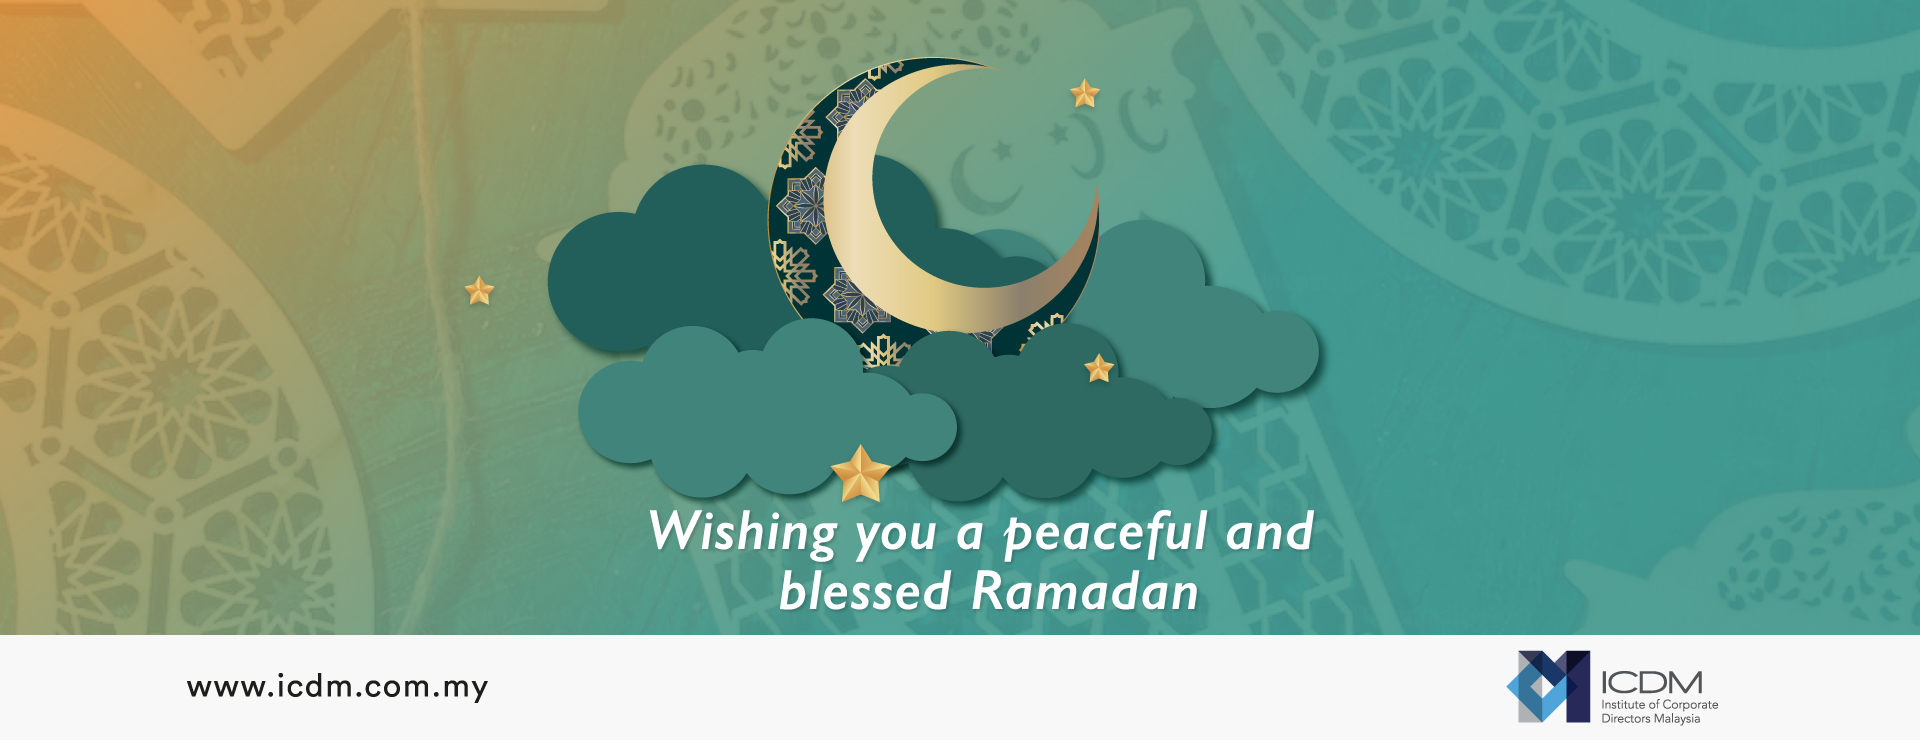 Ramadhan banner